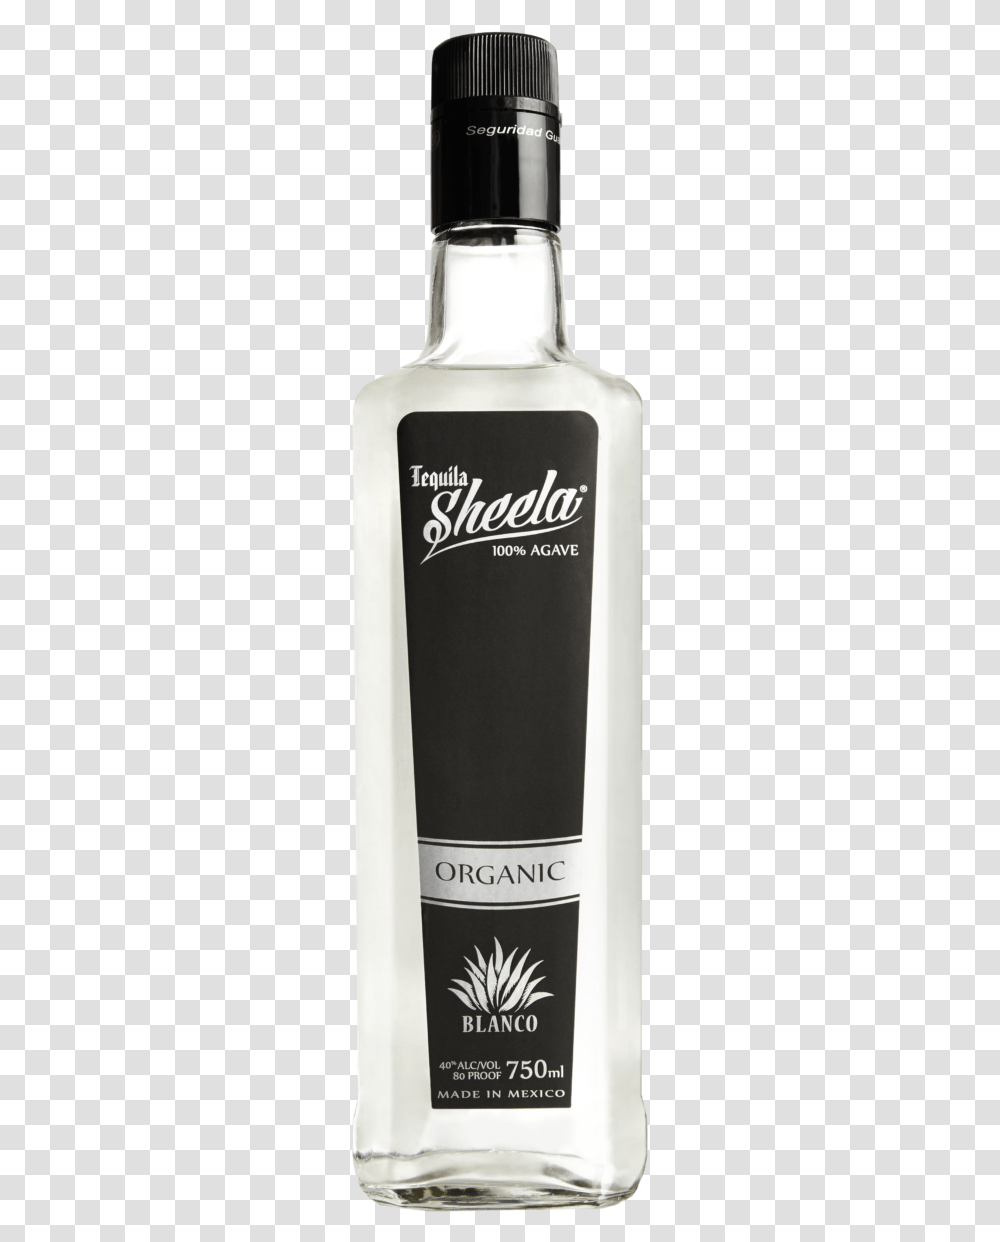 Tequila Sheela Tequila, Beverage, Alcohol, Bottle Transparent Png